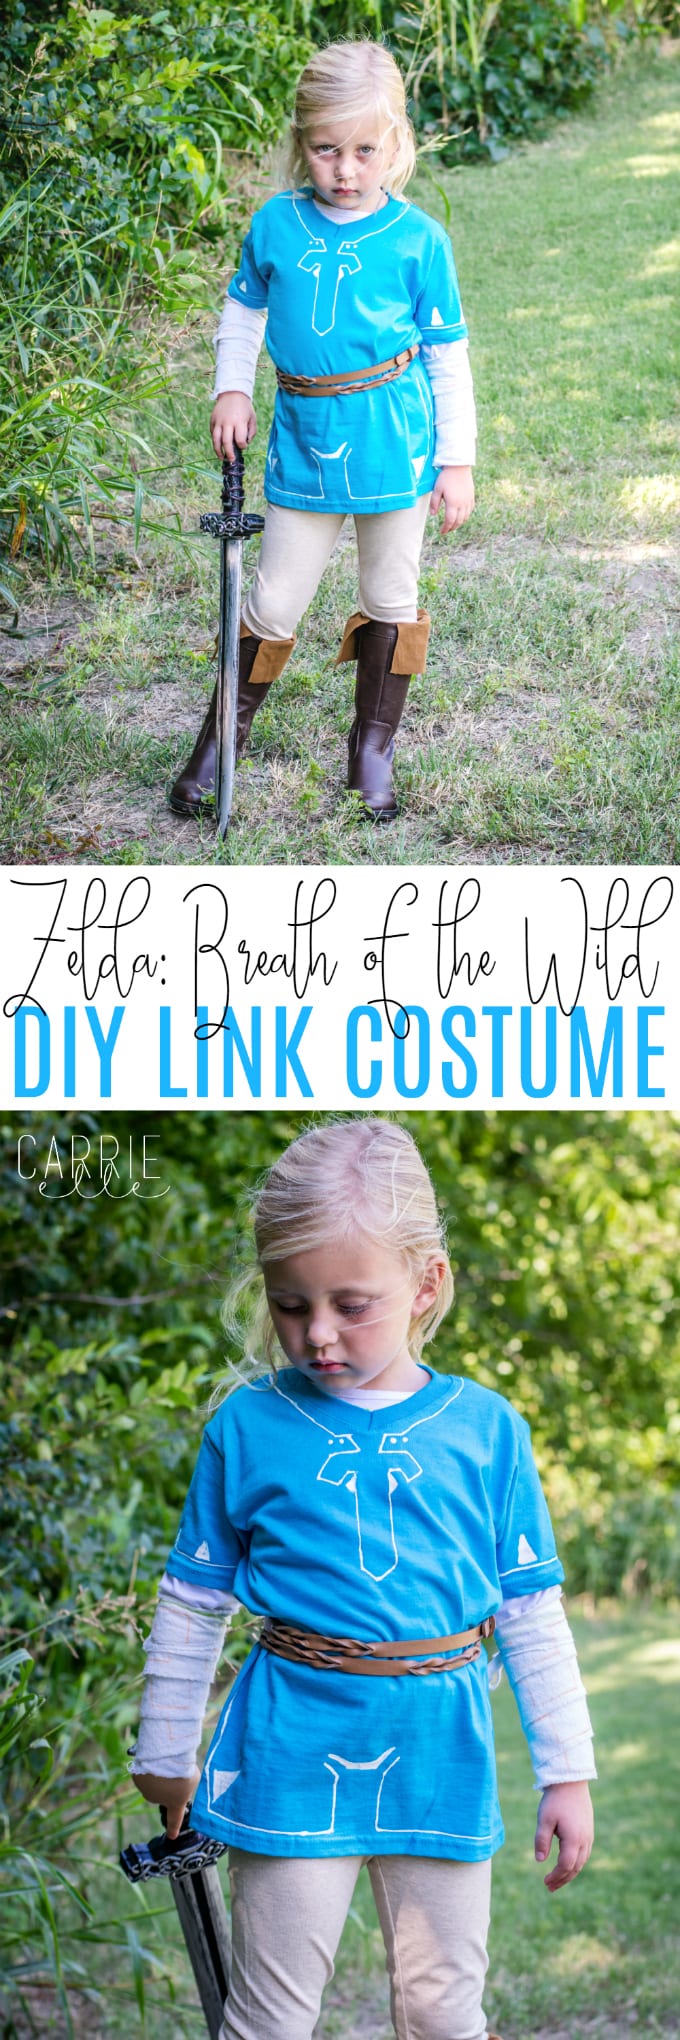 DIY Link Costume